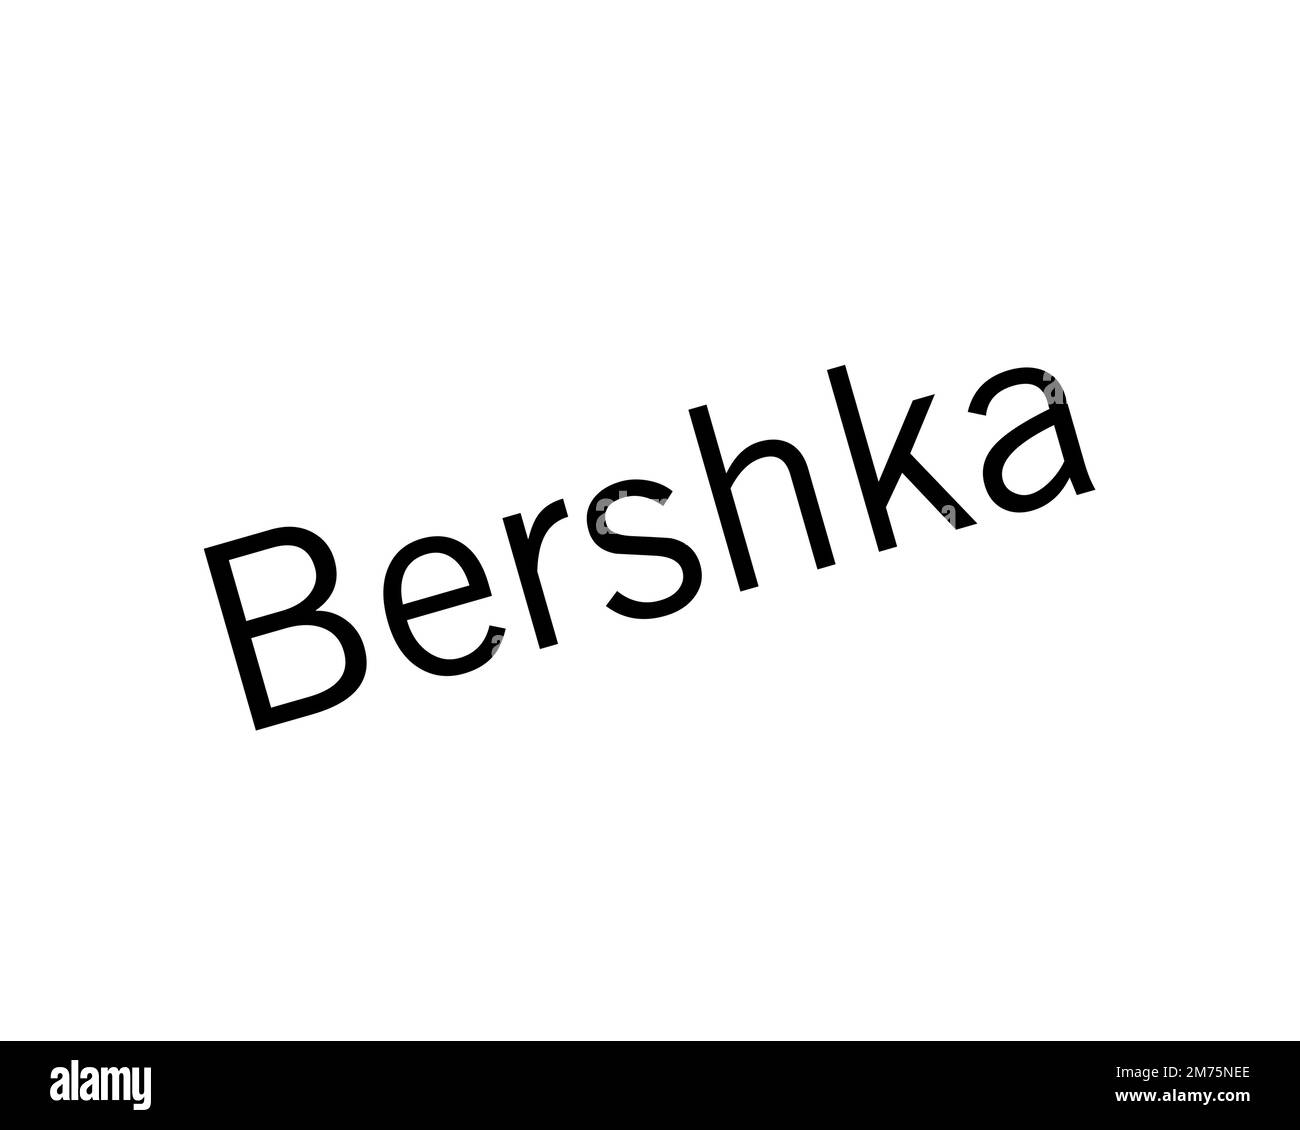 Bershka logo brand name Black and White Stock Photos & Images - Alamy